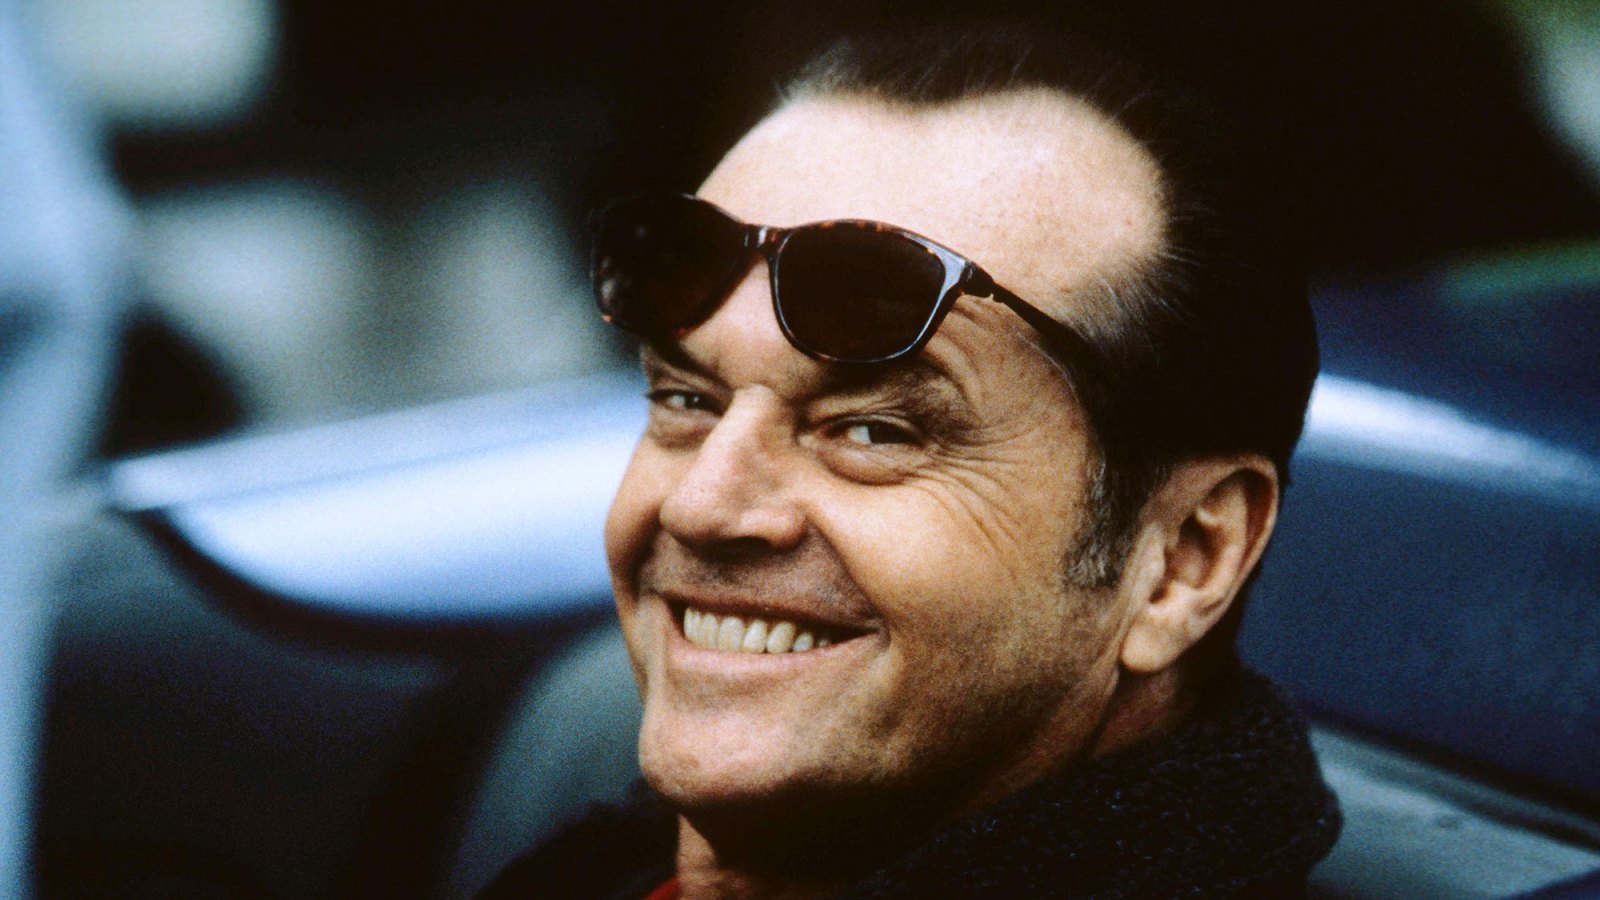 Jack Nicholson: I’m “Uncomfortable” With “Sex Legend” Rumors